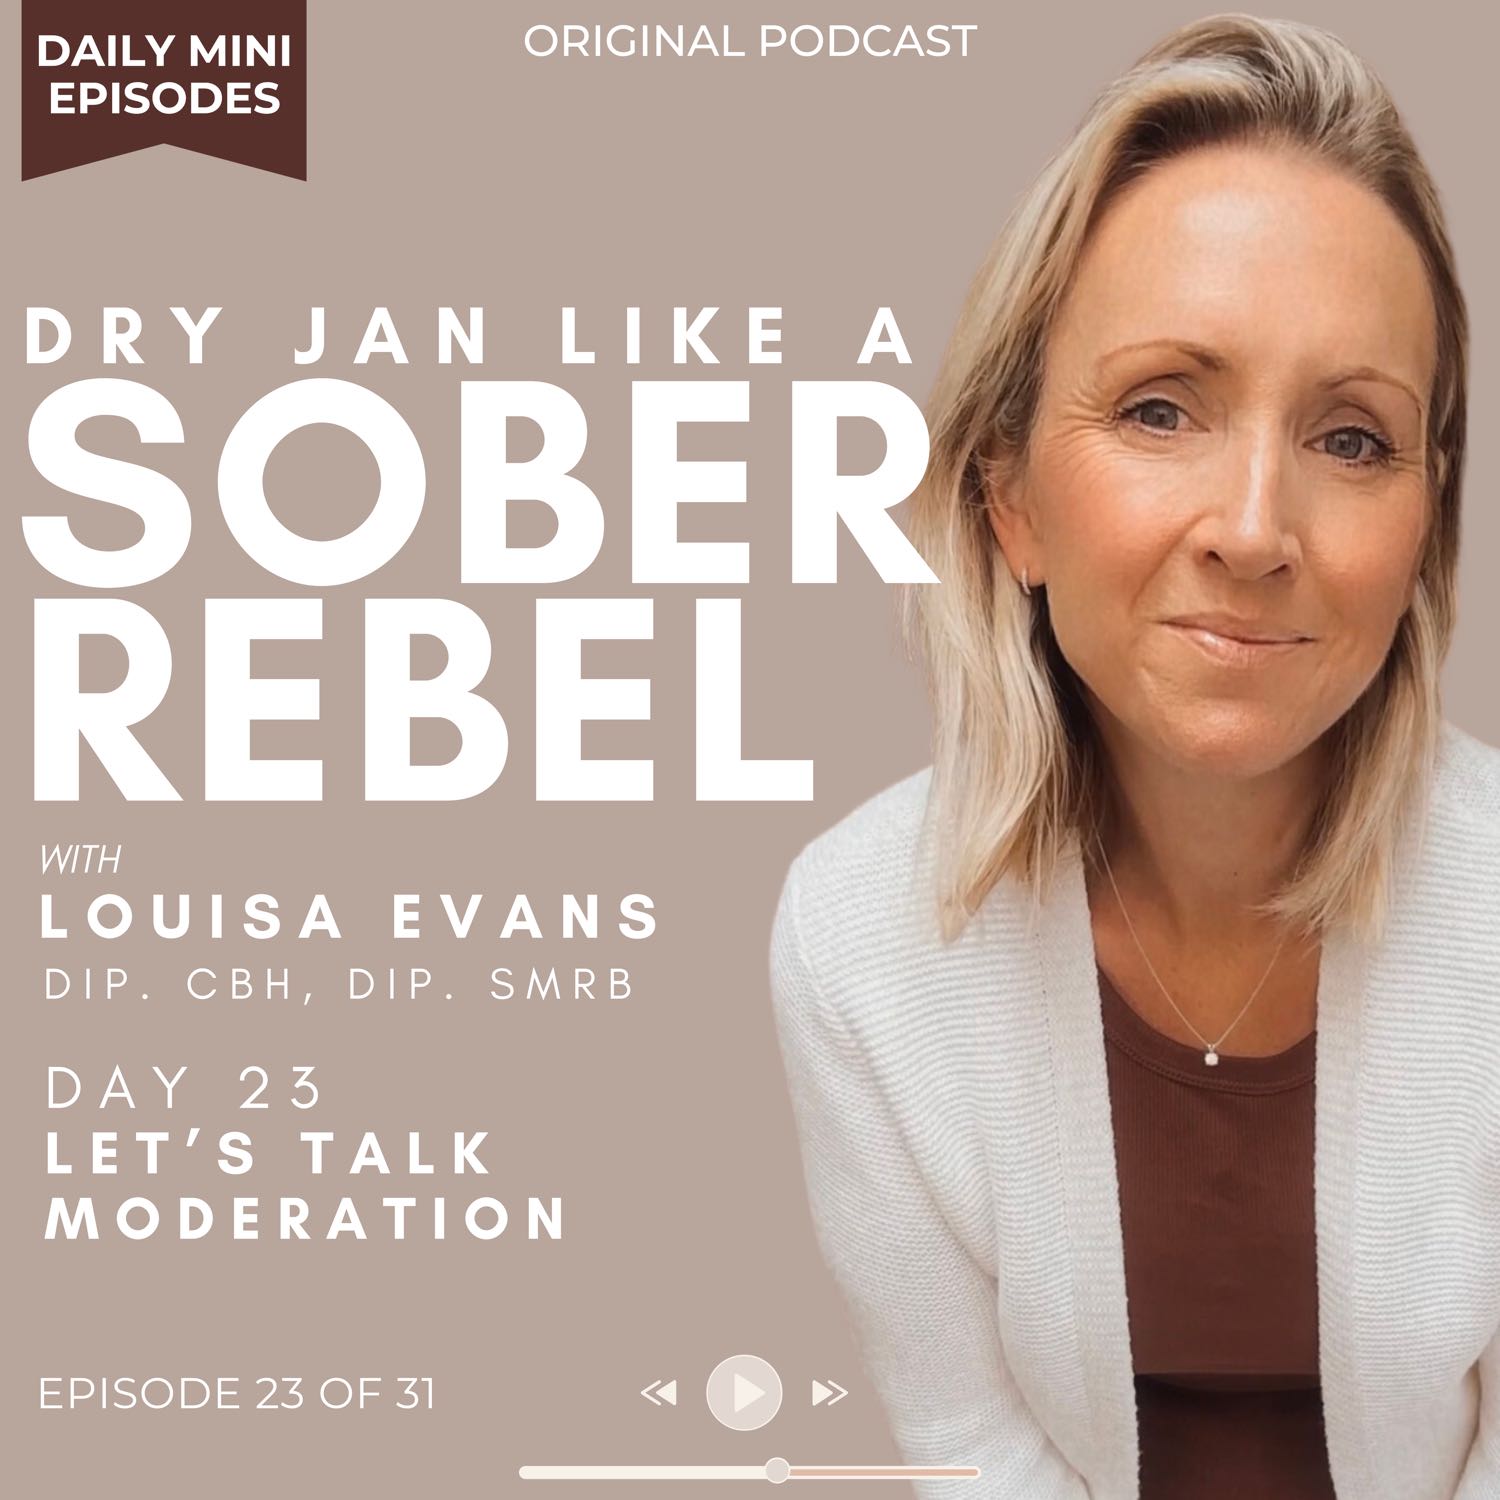 Dry Jan like a Sober Rebel | Let's talk moderation | Day 23